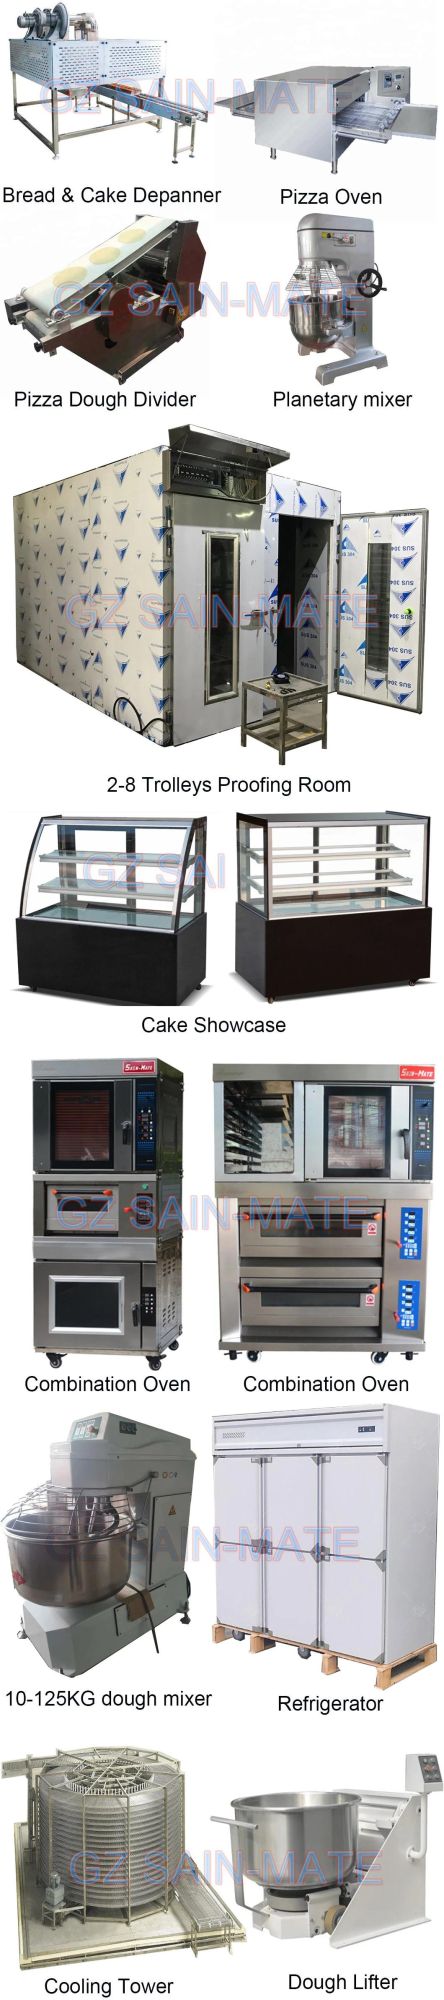 32 Tray Gas Rotary Oven for Bakery in Dubai, Rotary Oven Italy Burner